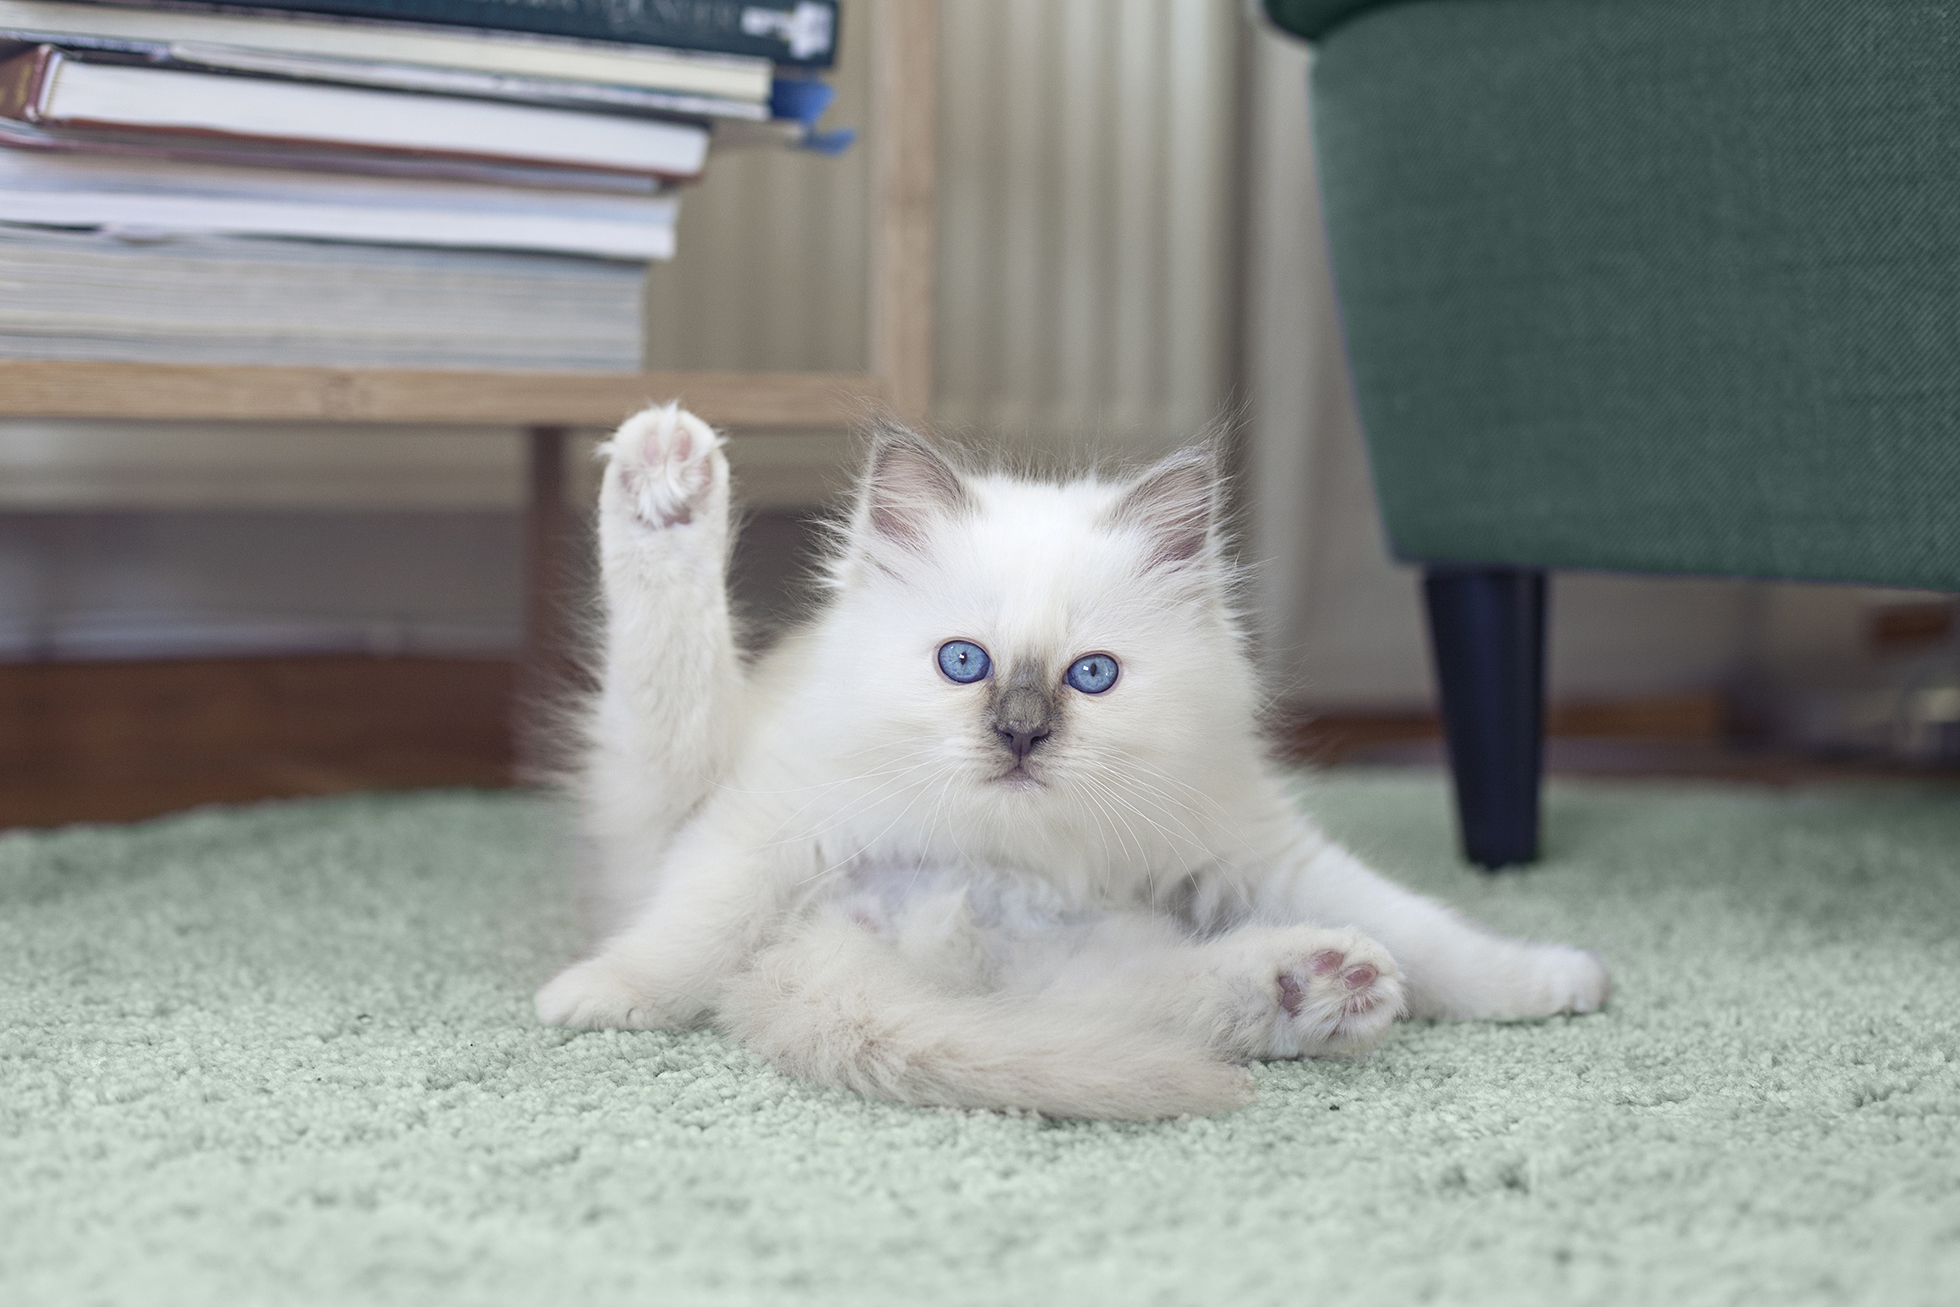 White kitten with blue eyes grooming self on green carpet